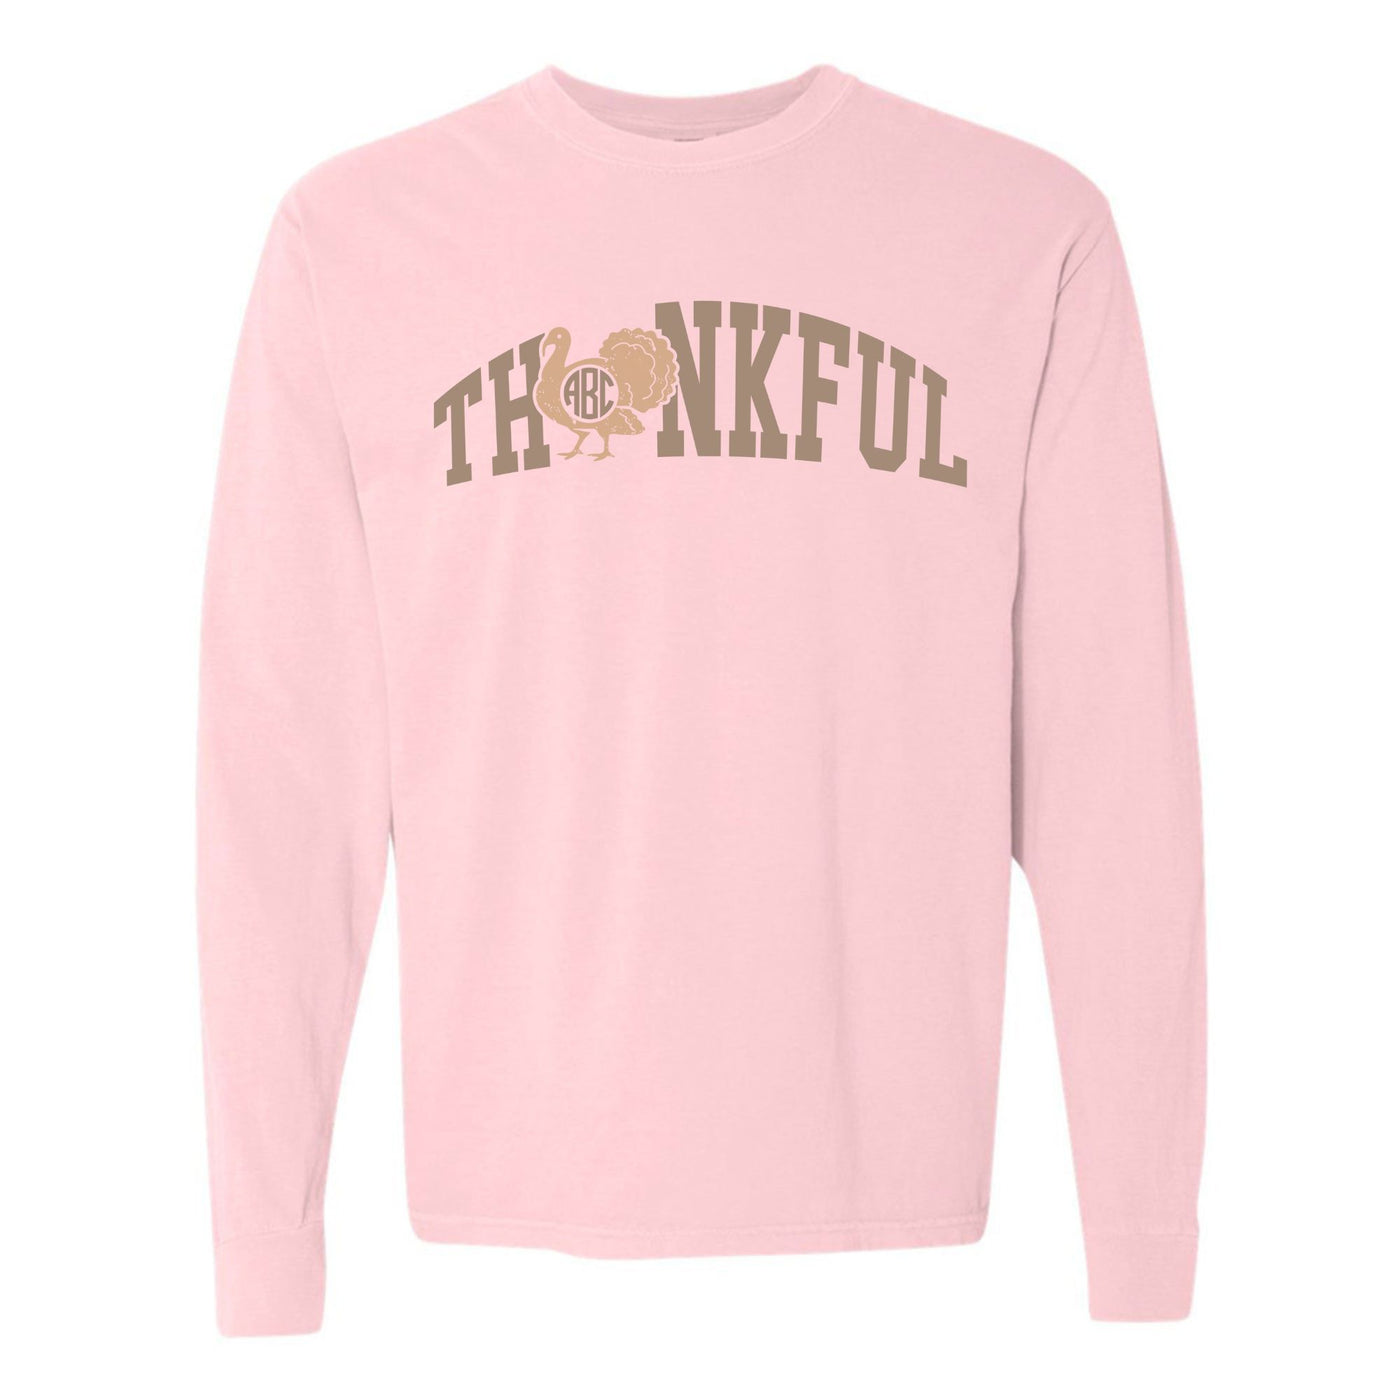 Monogrammed 'Thankful' Long Sleeve T-Shirt